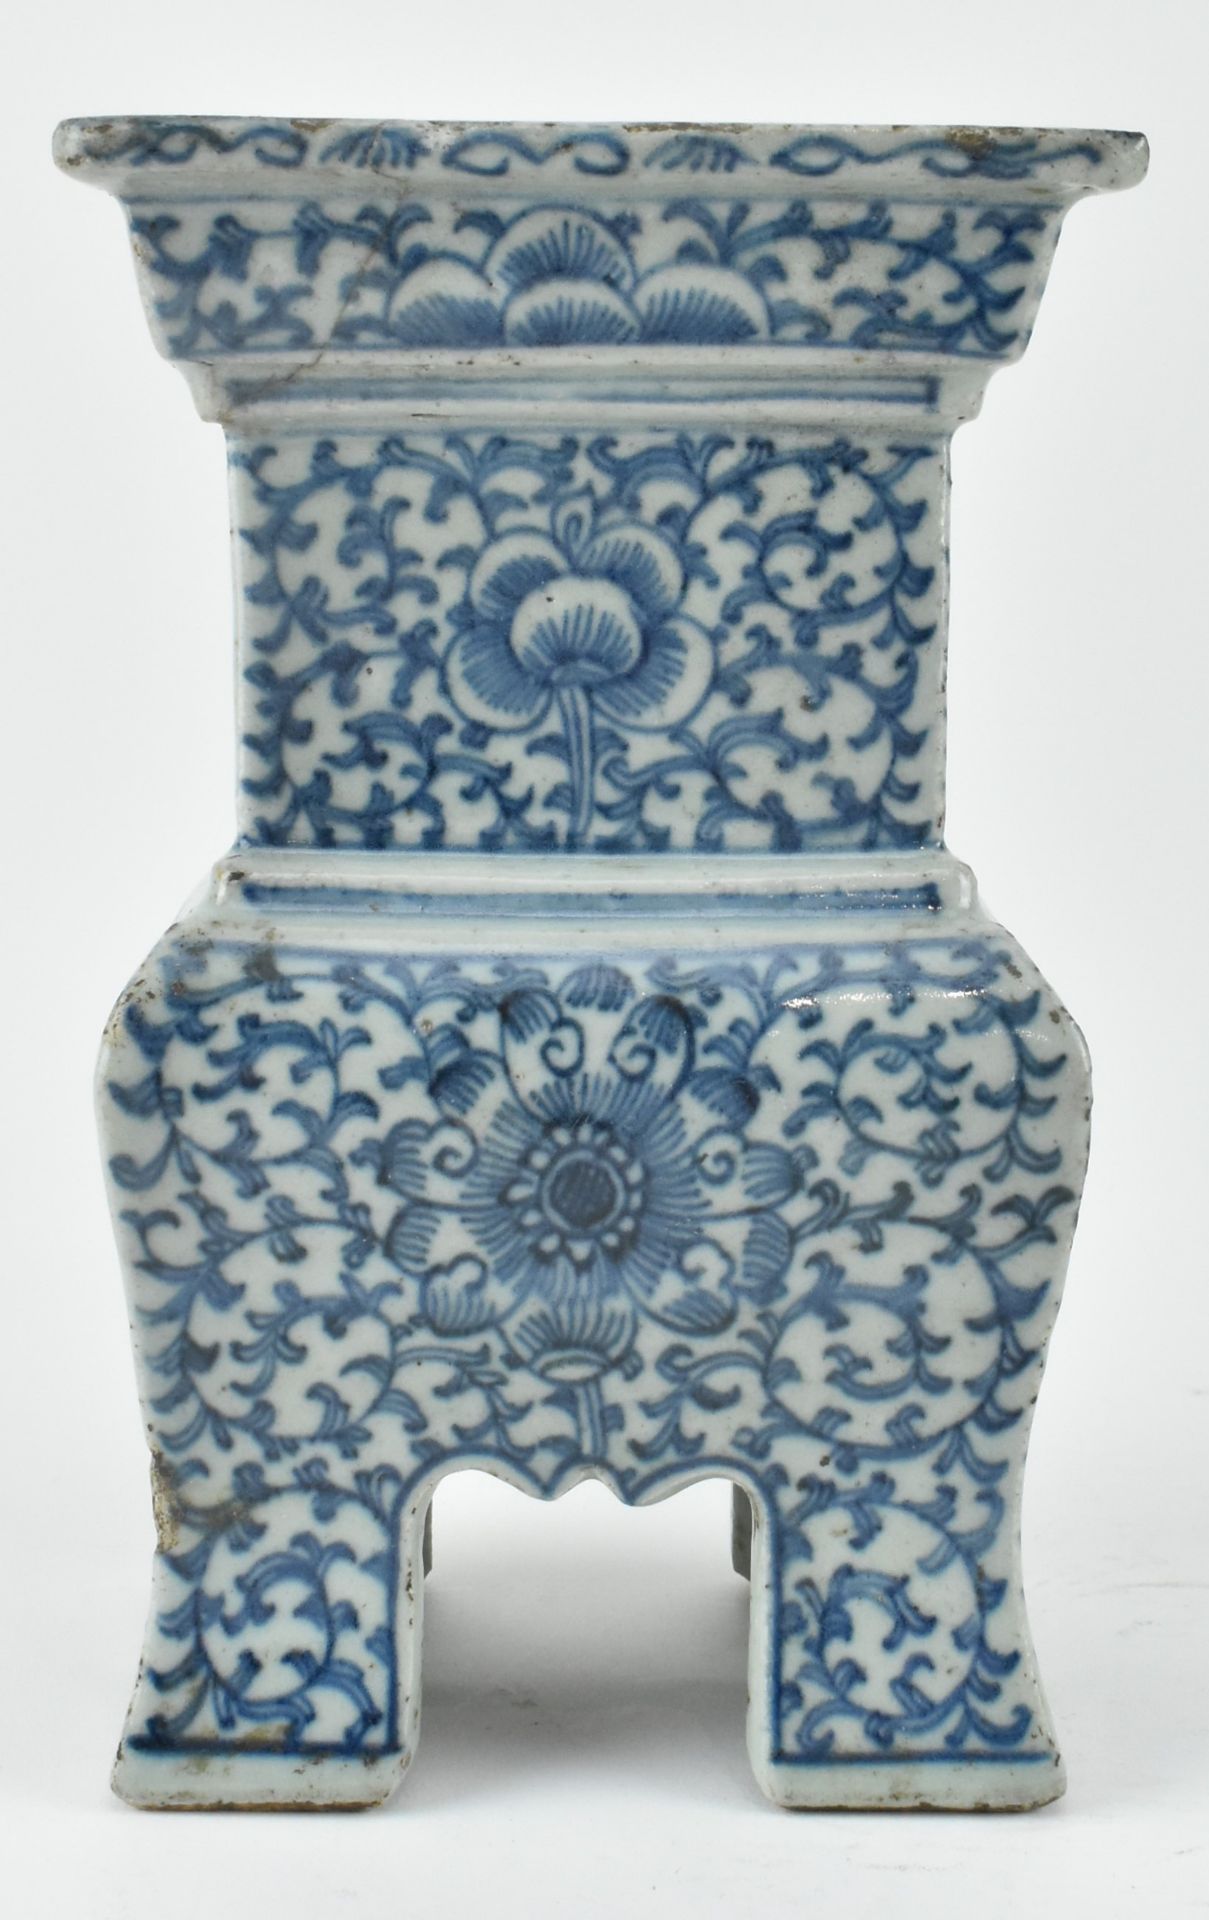 QING BLUE AND WHITE RECTANGULAR FOOTED CENSER 清 青花卷草纹香炉 - Image 3 of 6